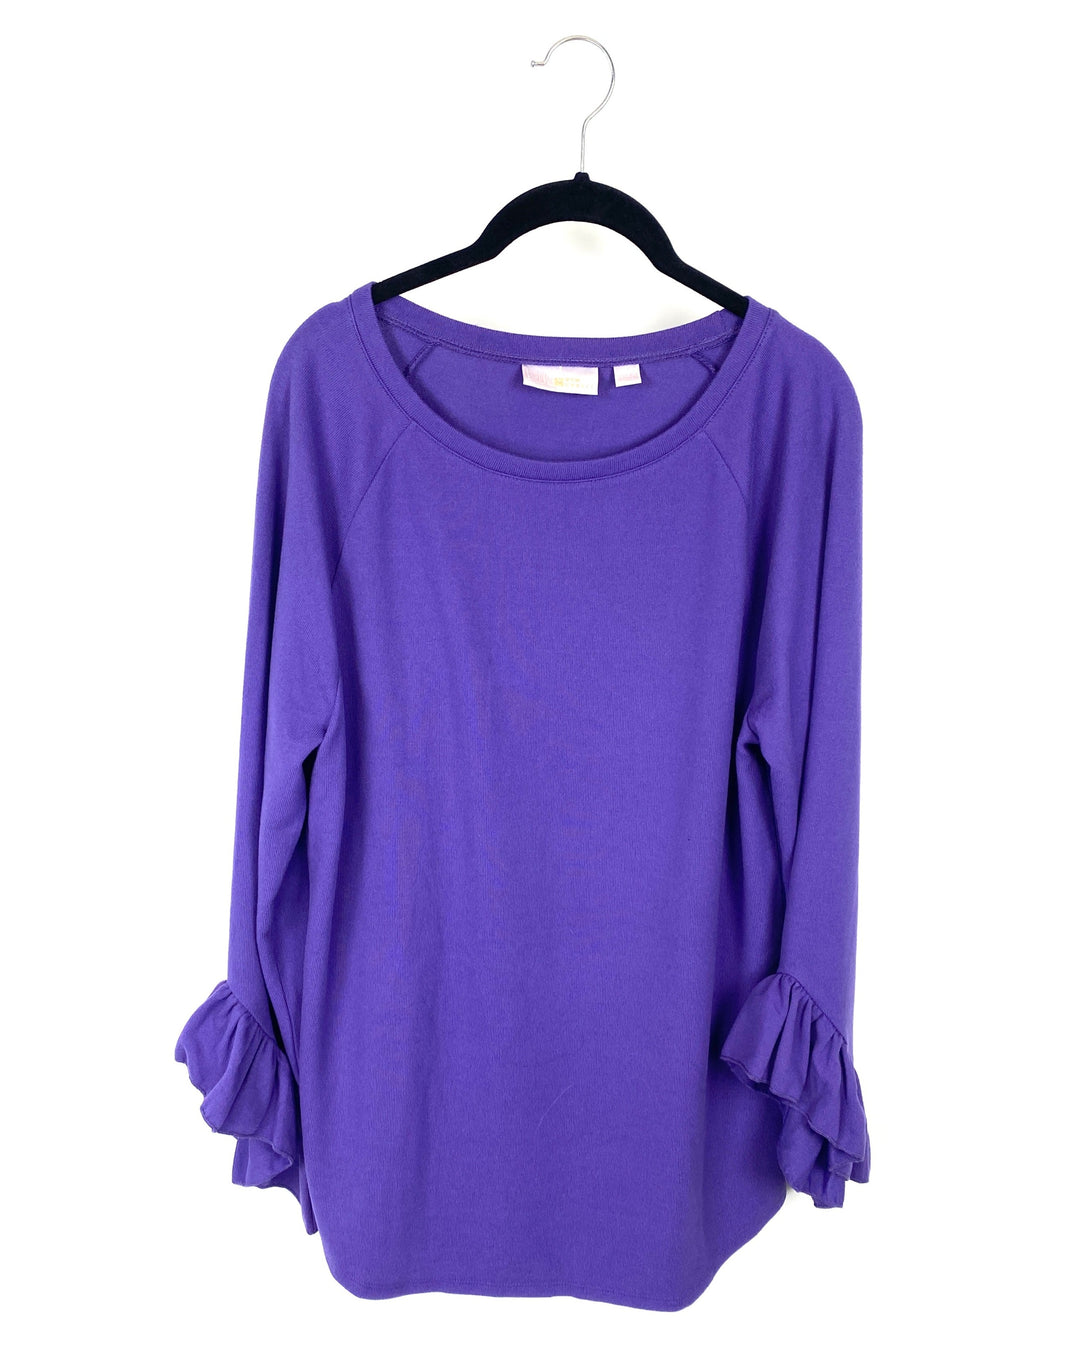 Purple Ruffled Sleeve Top - Small/Medium